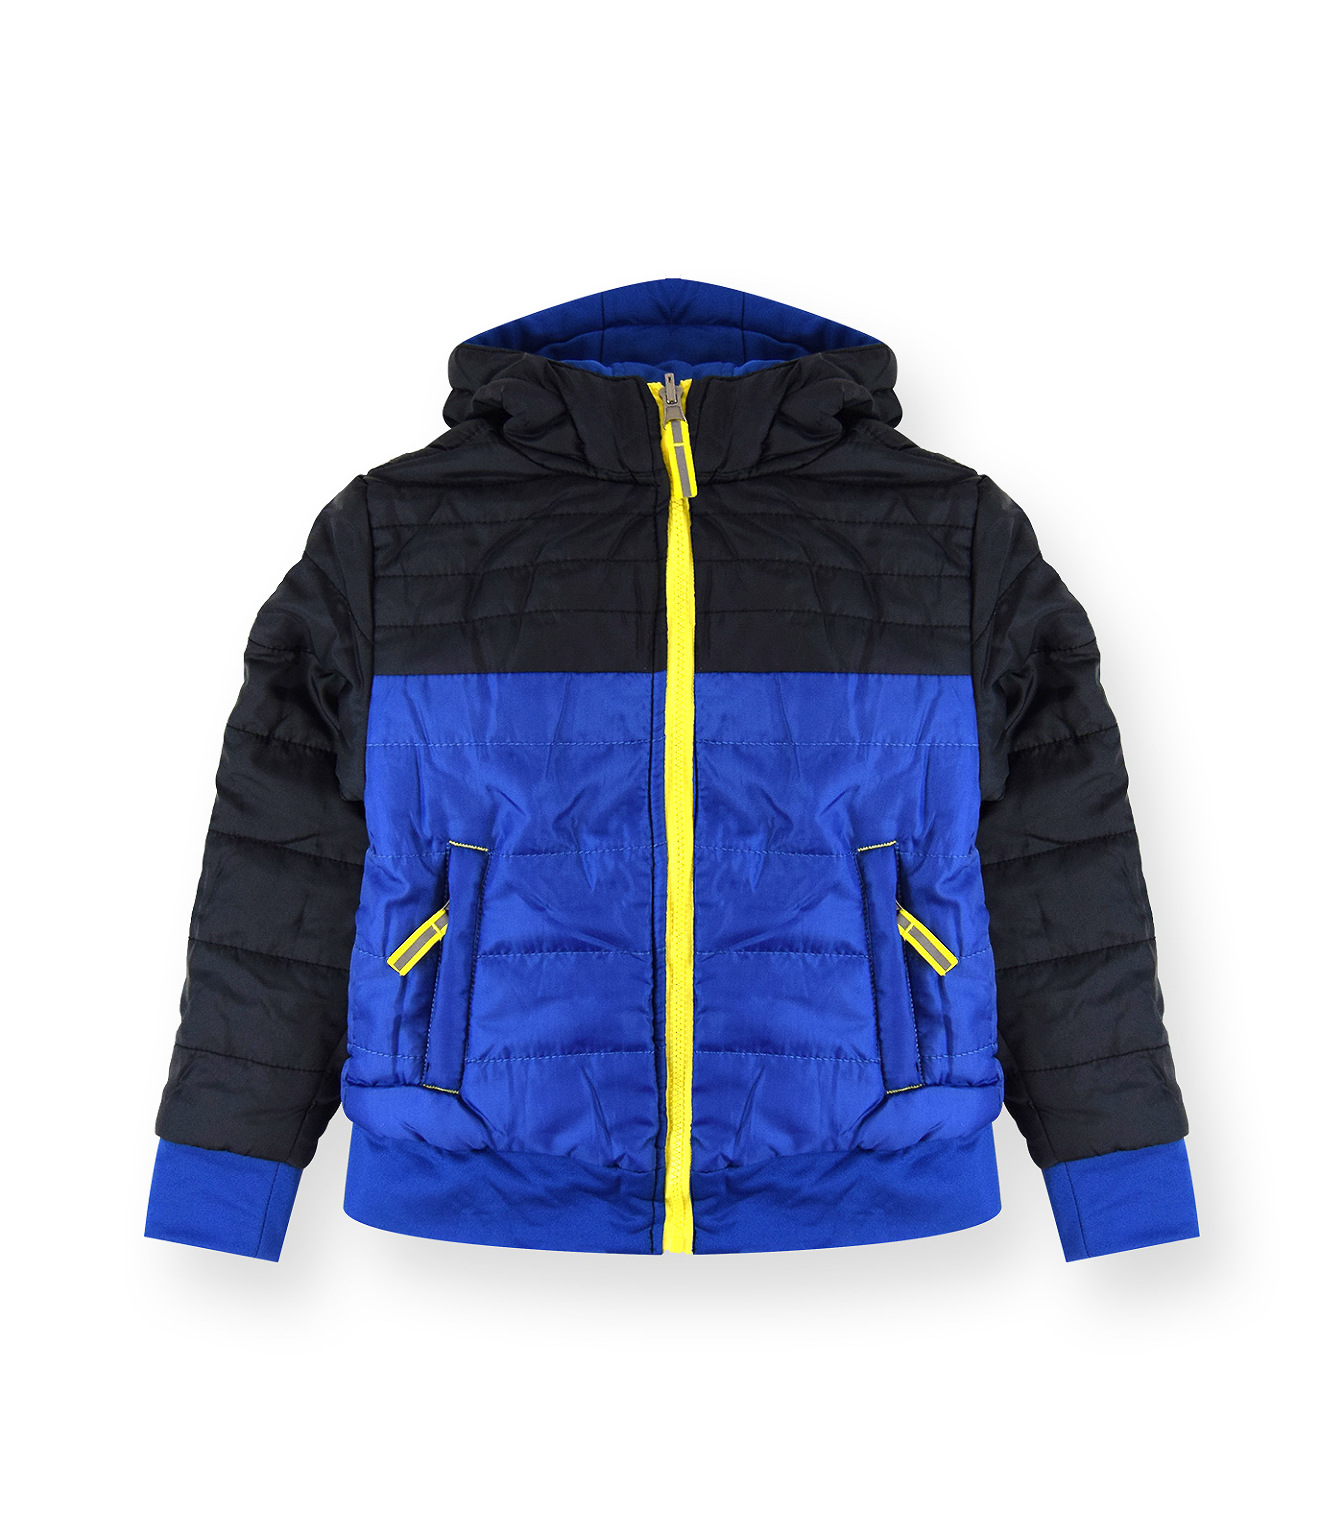 Wholesale Kids' Space Jackets - 4-10, Blue/Black, Hooded